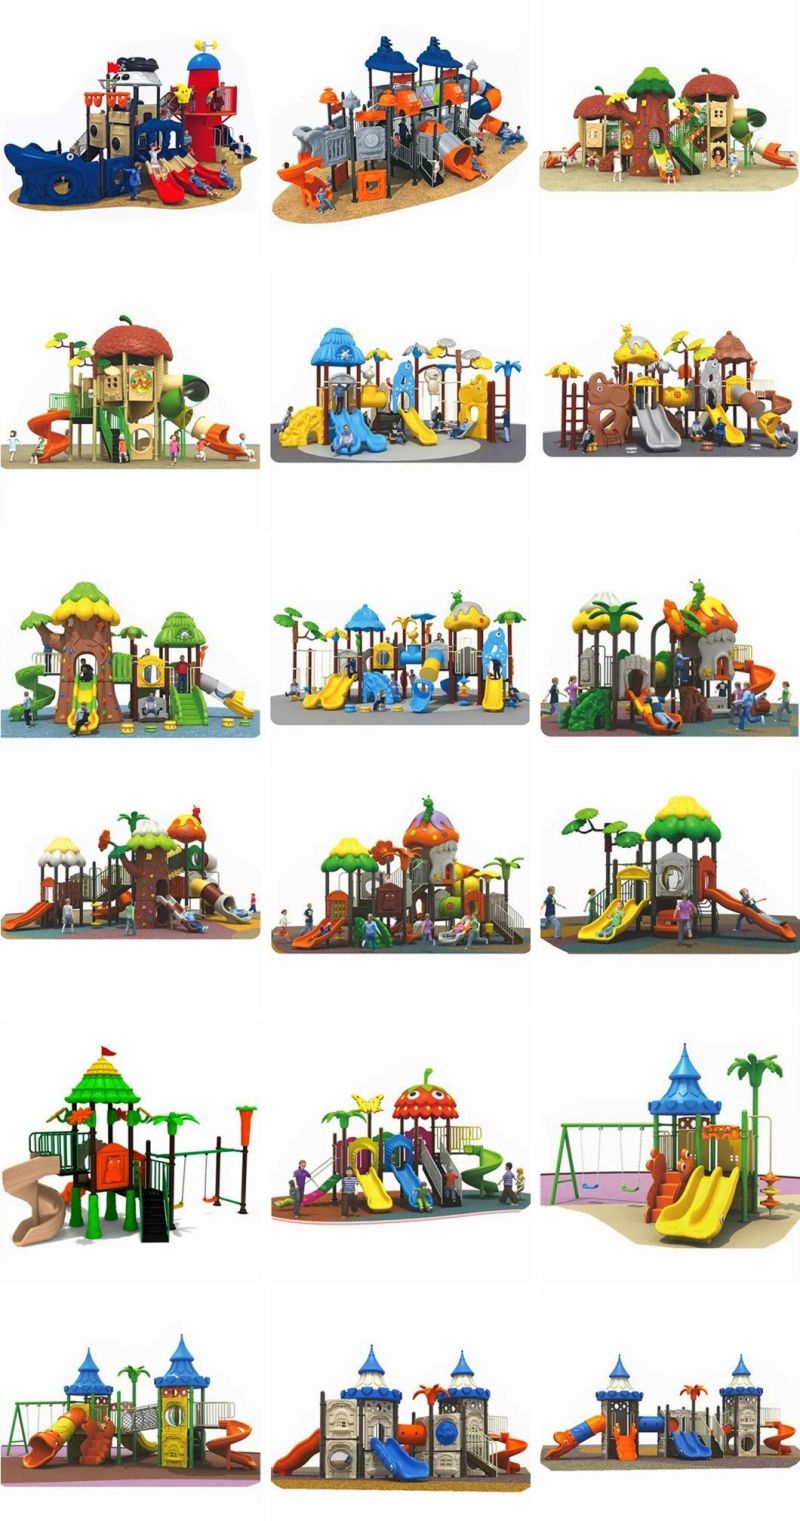 Large Outdoor Children′s Amusement Park Slide Playground Combination Equipment